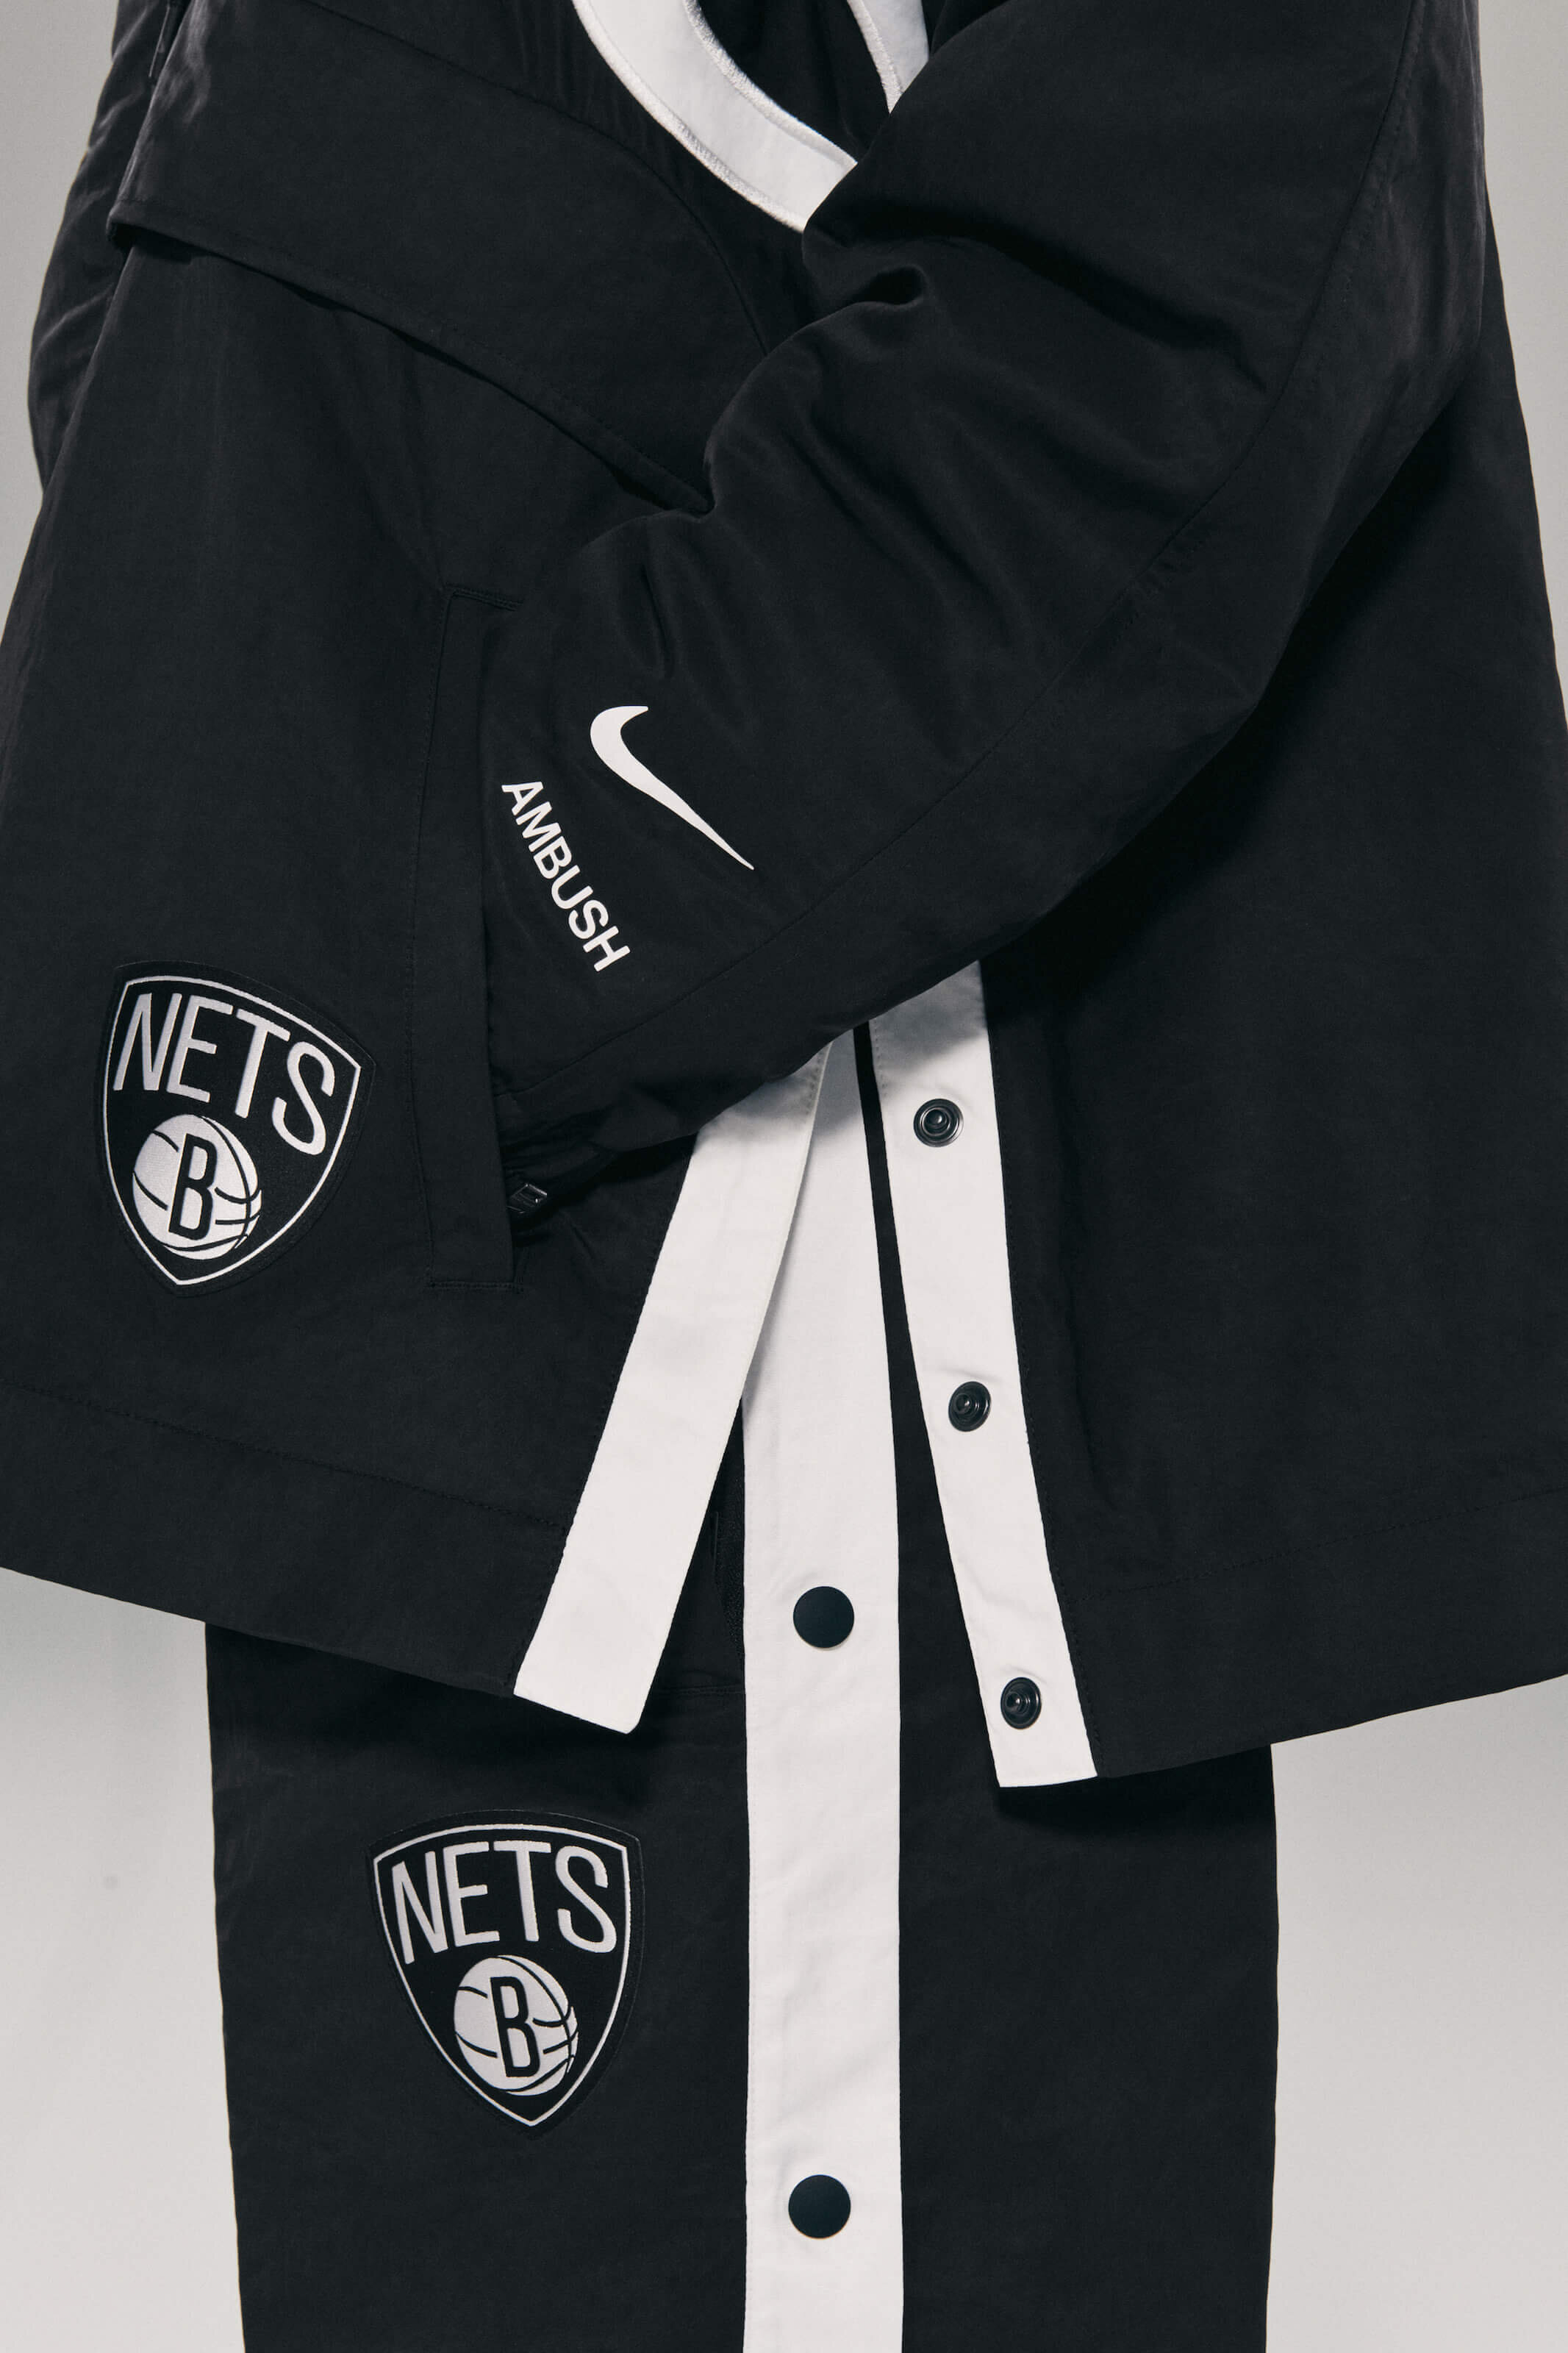 CNK-nike-x-ambush-nba-apparel-collection-Brooklyn-Nets-jacket-pants-side.jpg